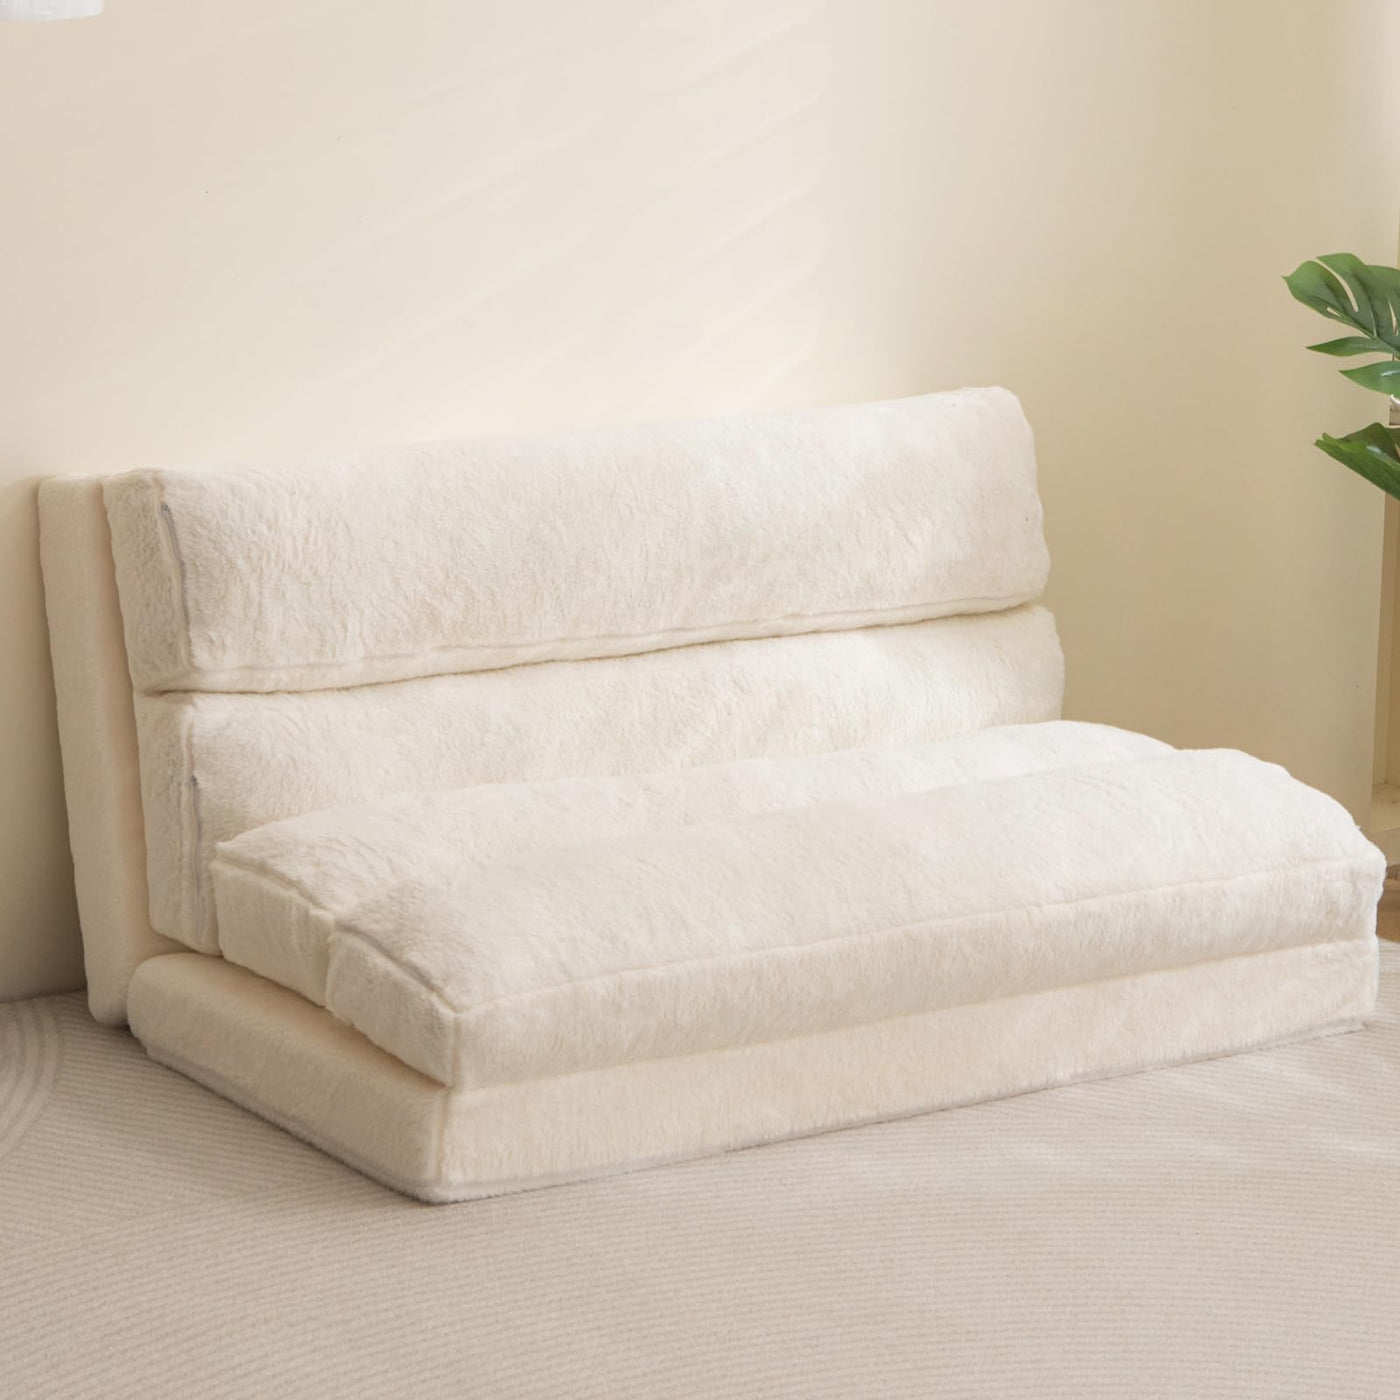 MAXYOYO  Bean Bag Bed Folding Sofa Bed, Extra Wider Fold Full Floor Mattress, Beige Floor Couch